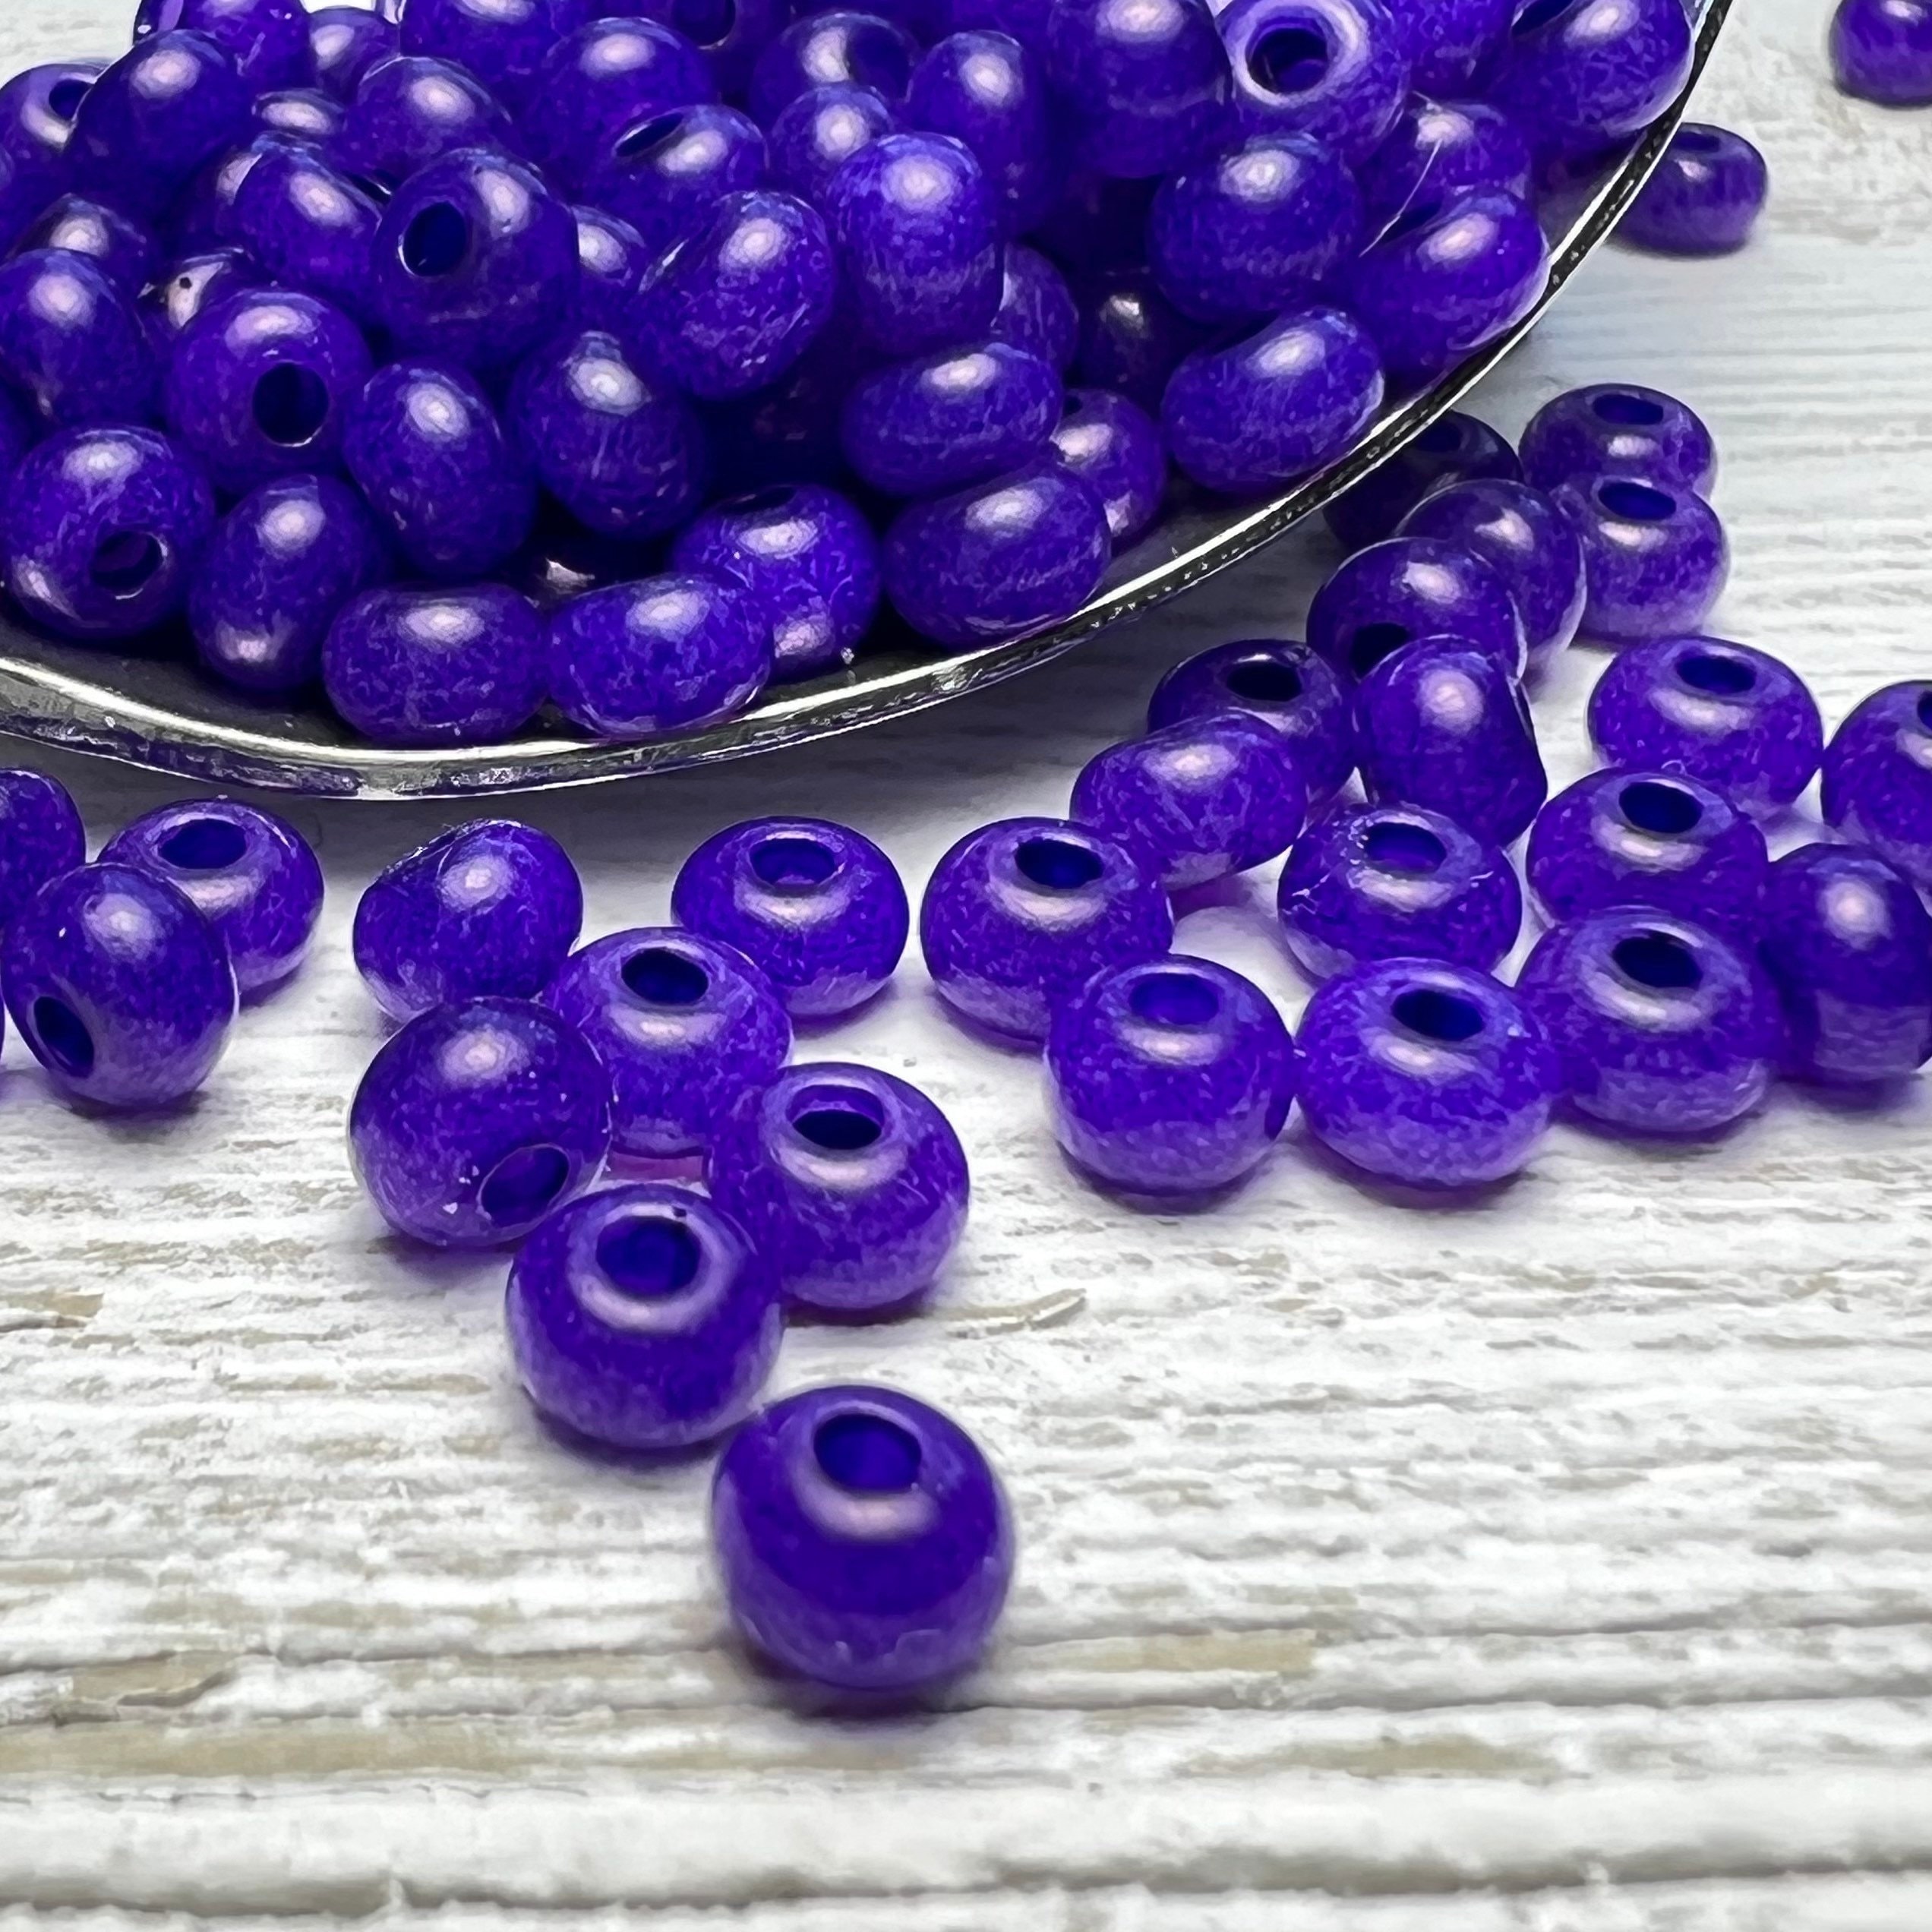 Czech Glass Seed Beads Size 6/0 (4.1mm)  BLACK MATTE  Loose 50 Grams